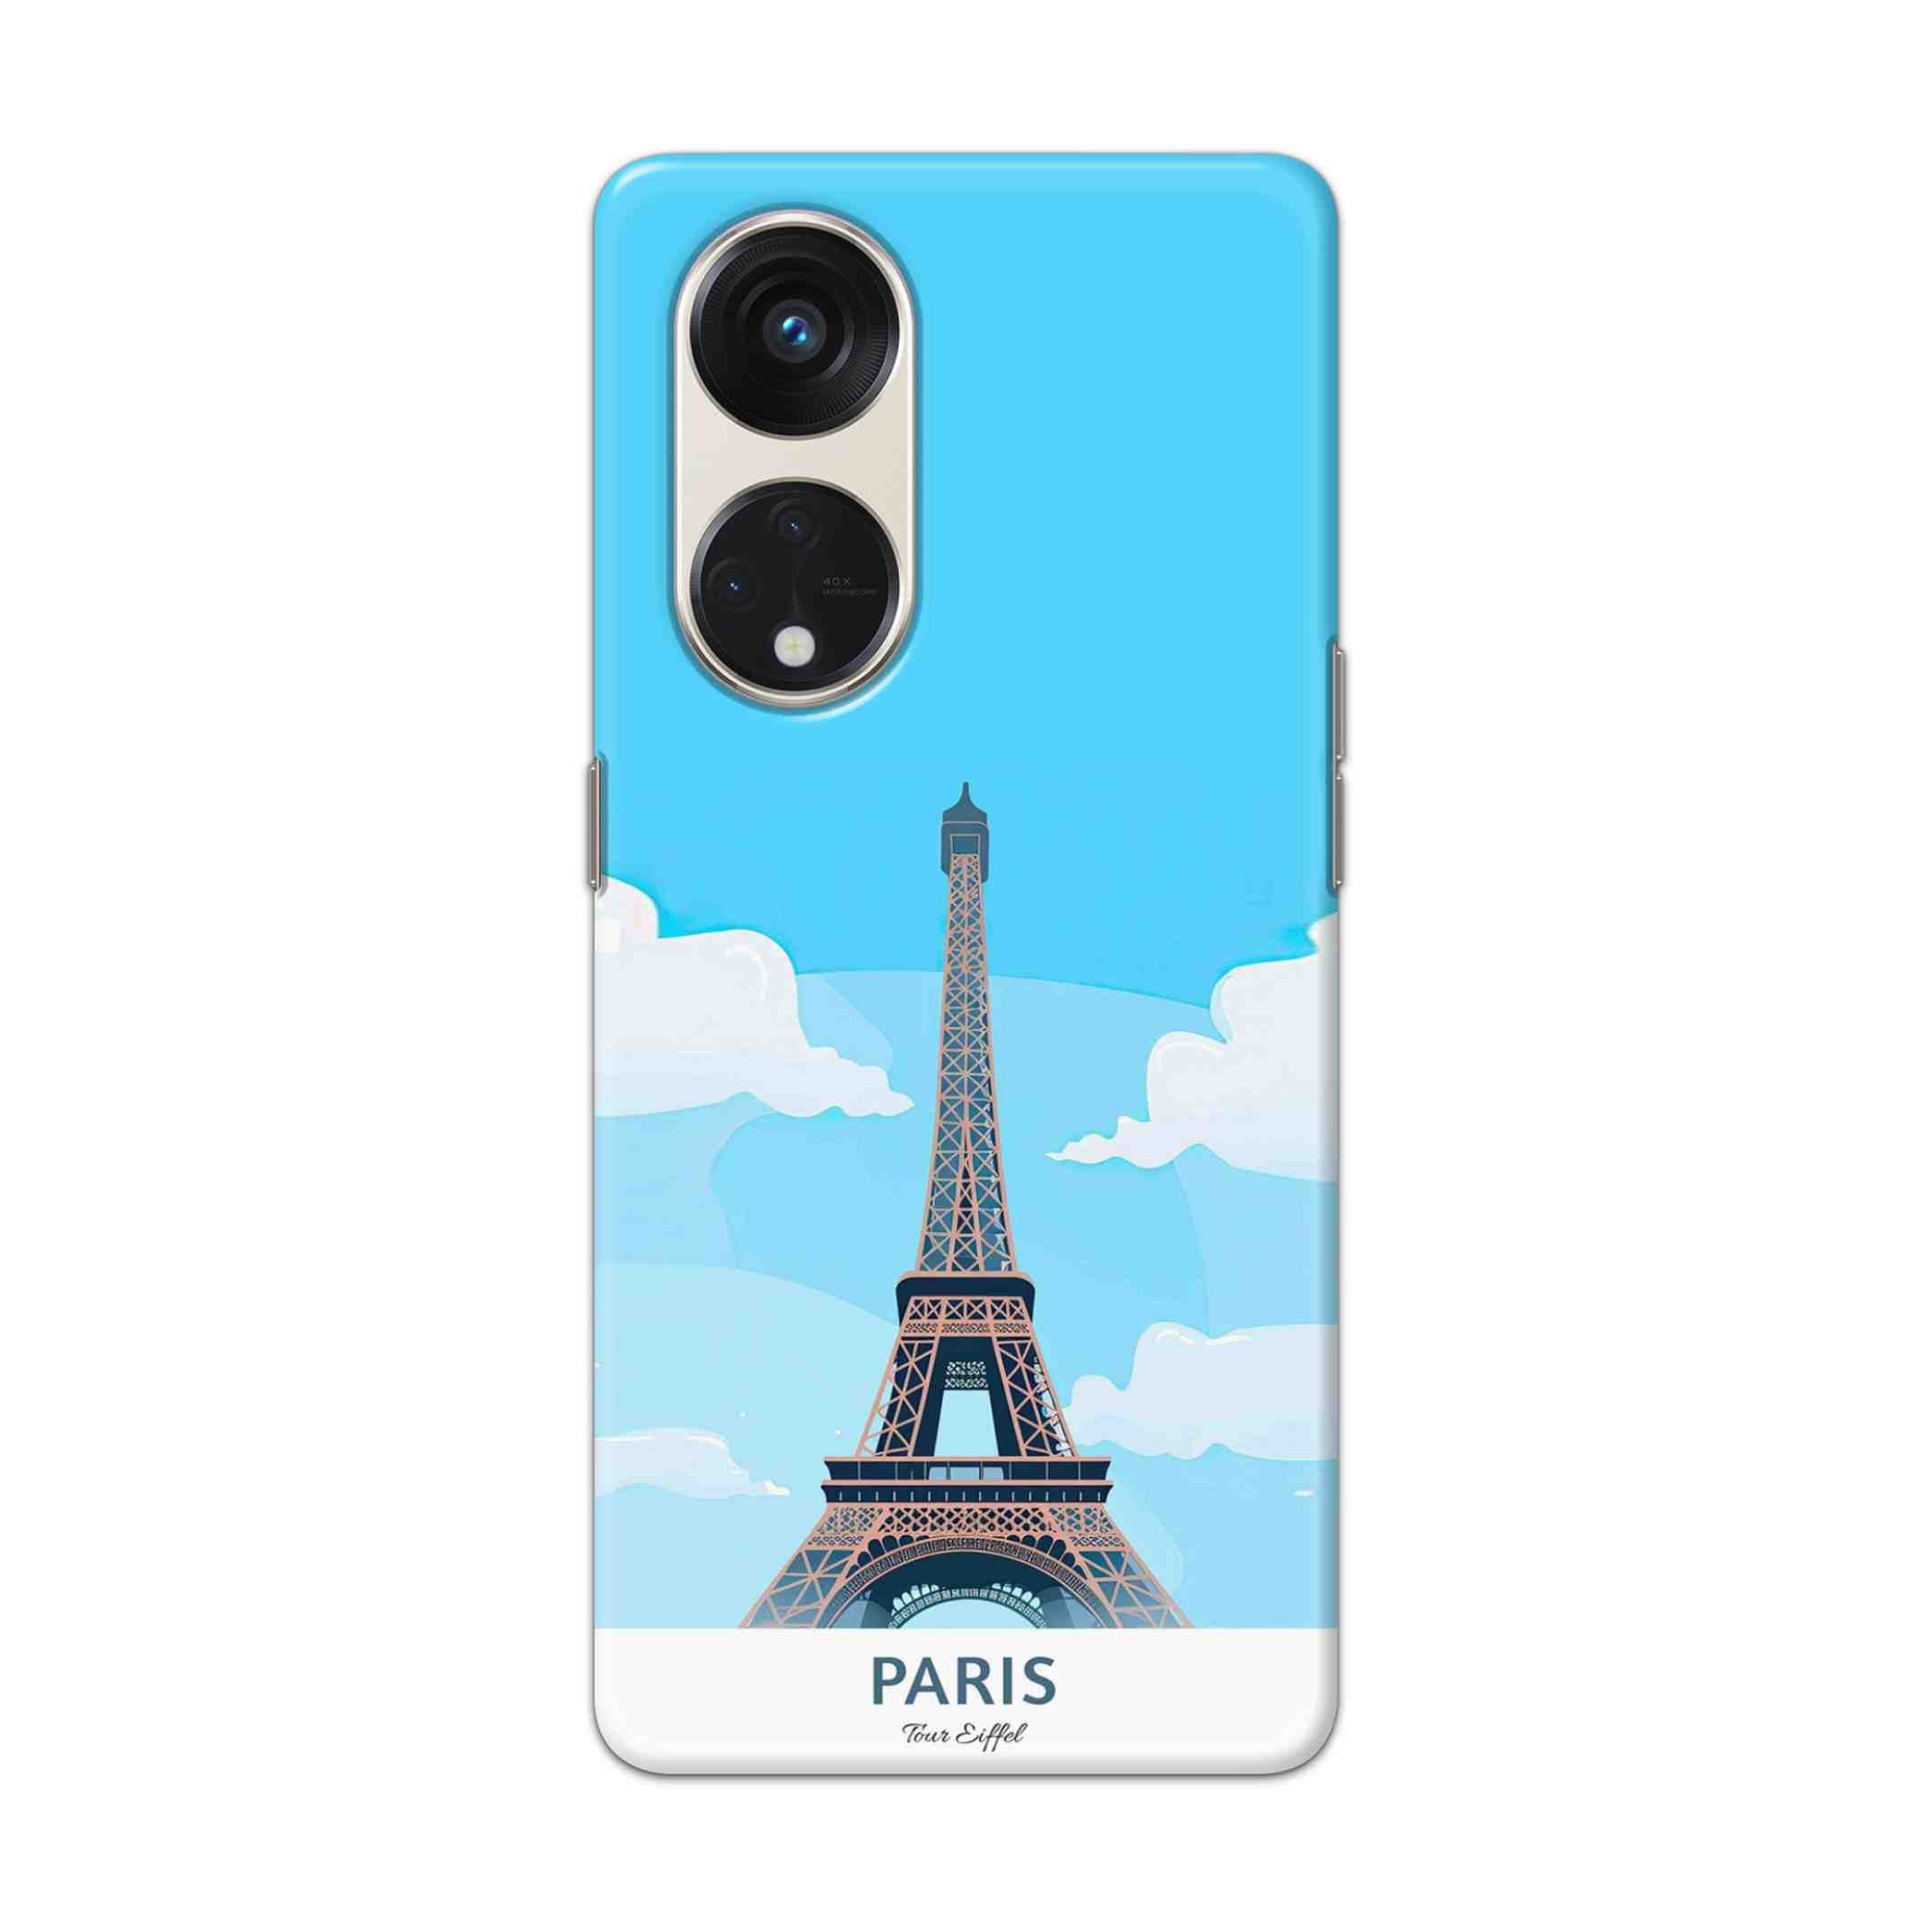 Buy Paris Hard Back Mobile Phone Case/Cover For Oppo Reno 8T 5g Online